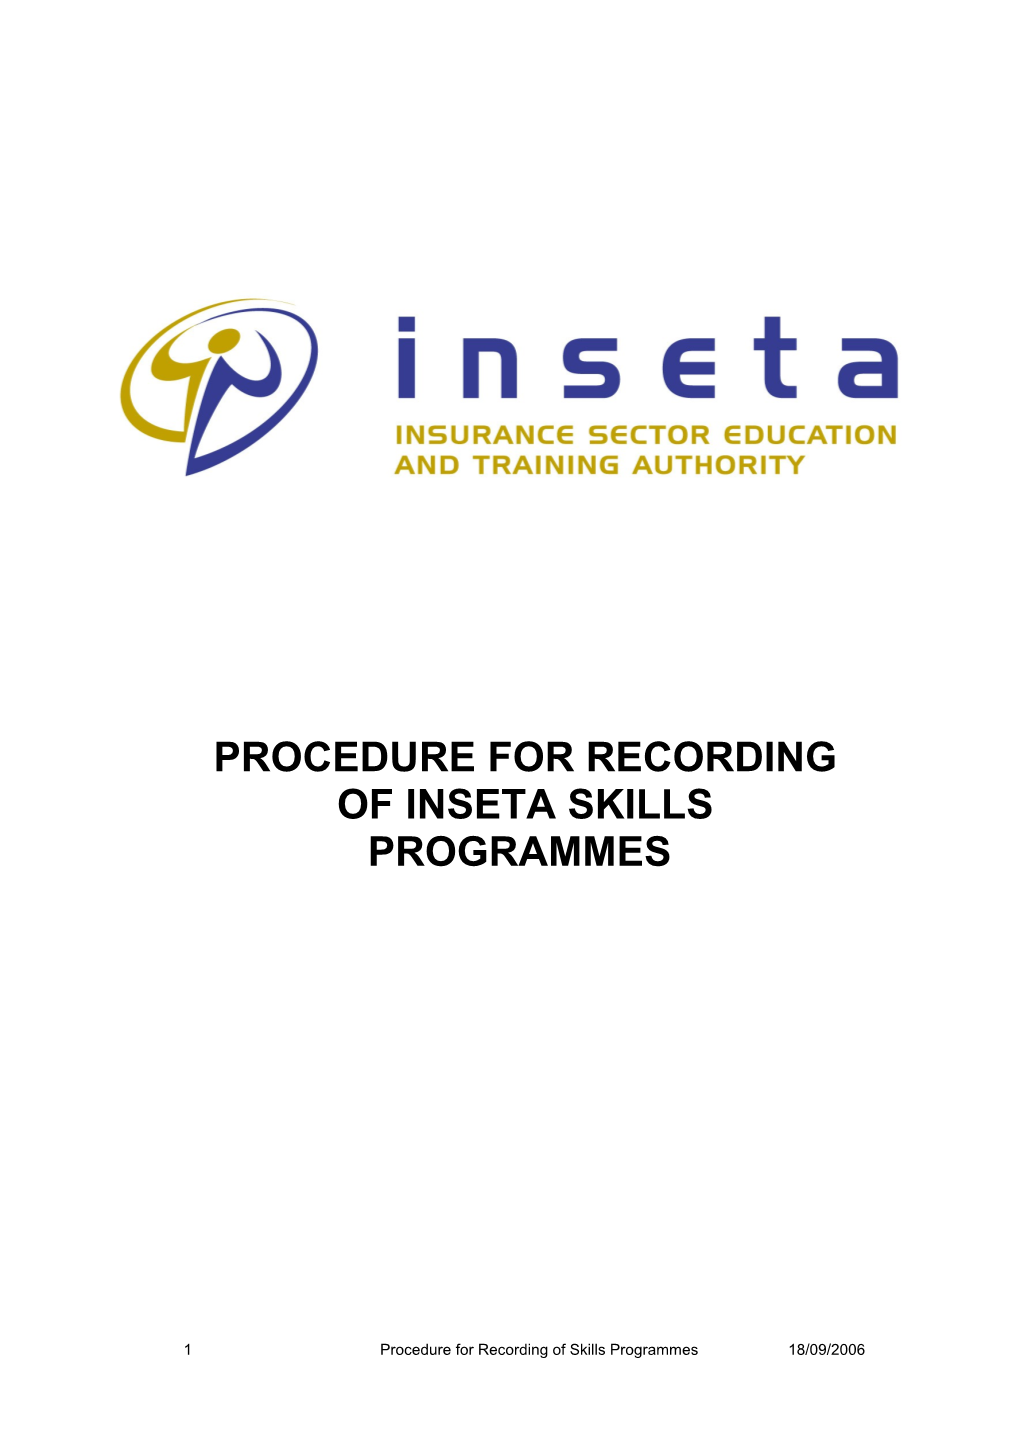 Procedure for Recording of Inseta Skills Programmes